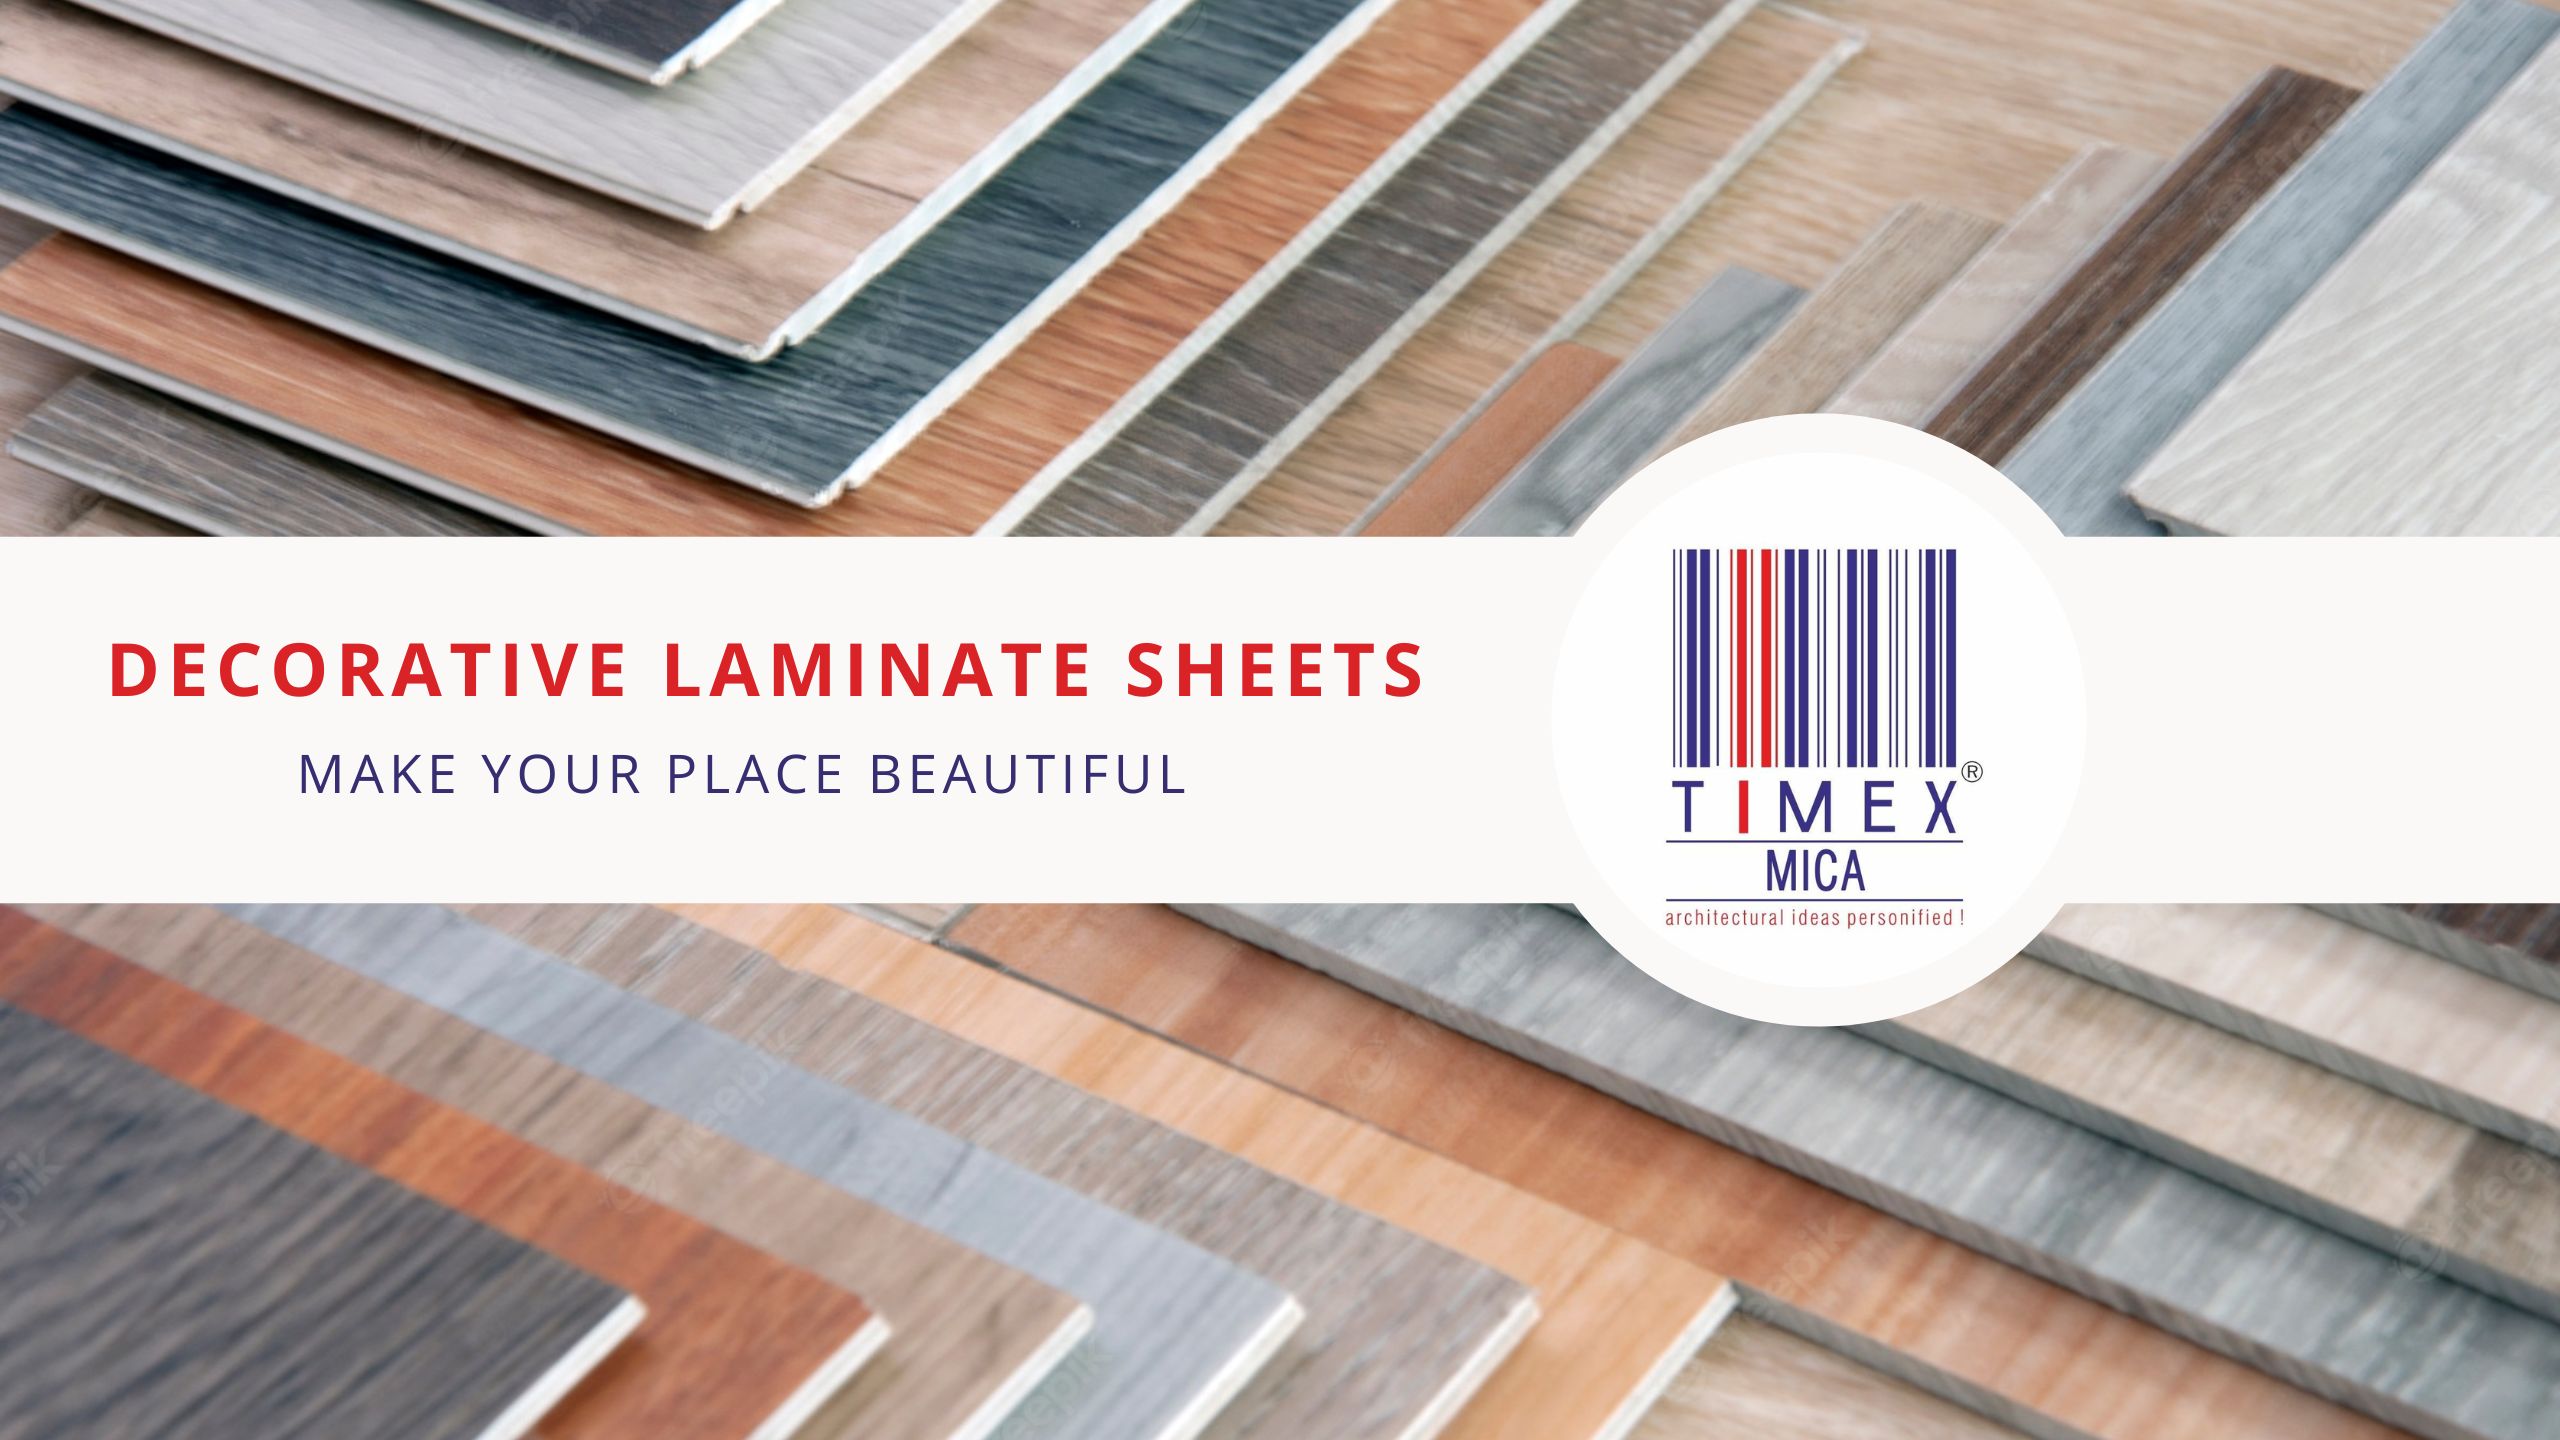 Decorative Laminate Sheets - Make Your Place Beautiful